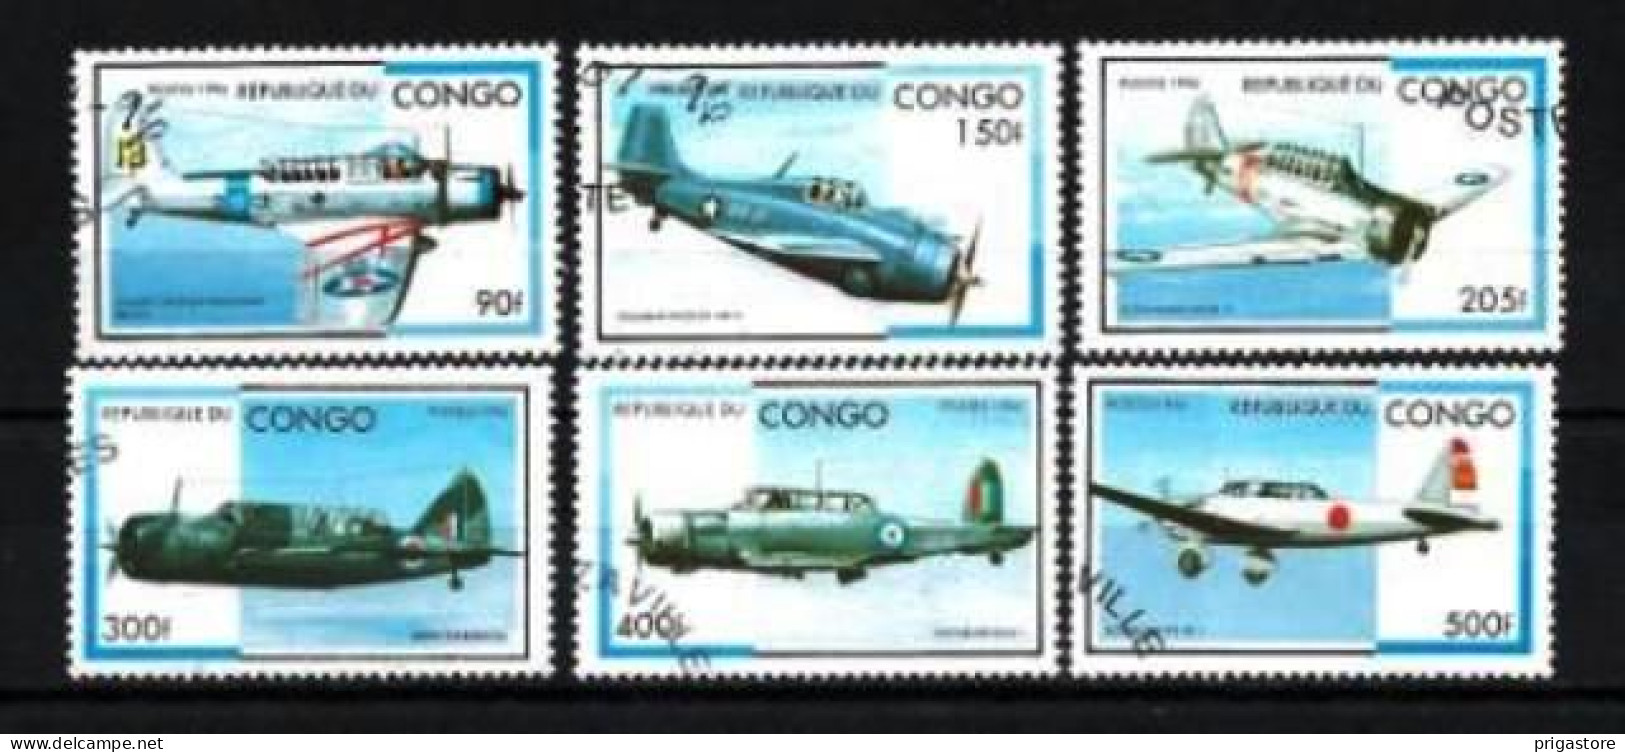 Congo 1996 Avions (39) Yvert N° 1026 N à 1026 T Oblitéré Used - Used